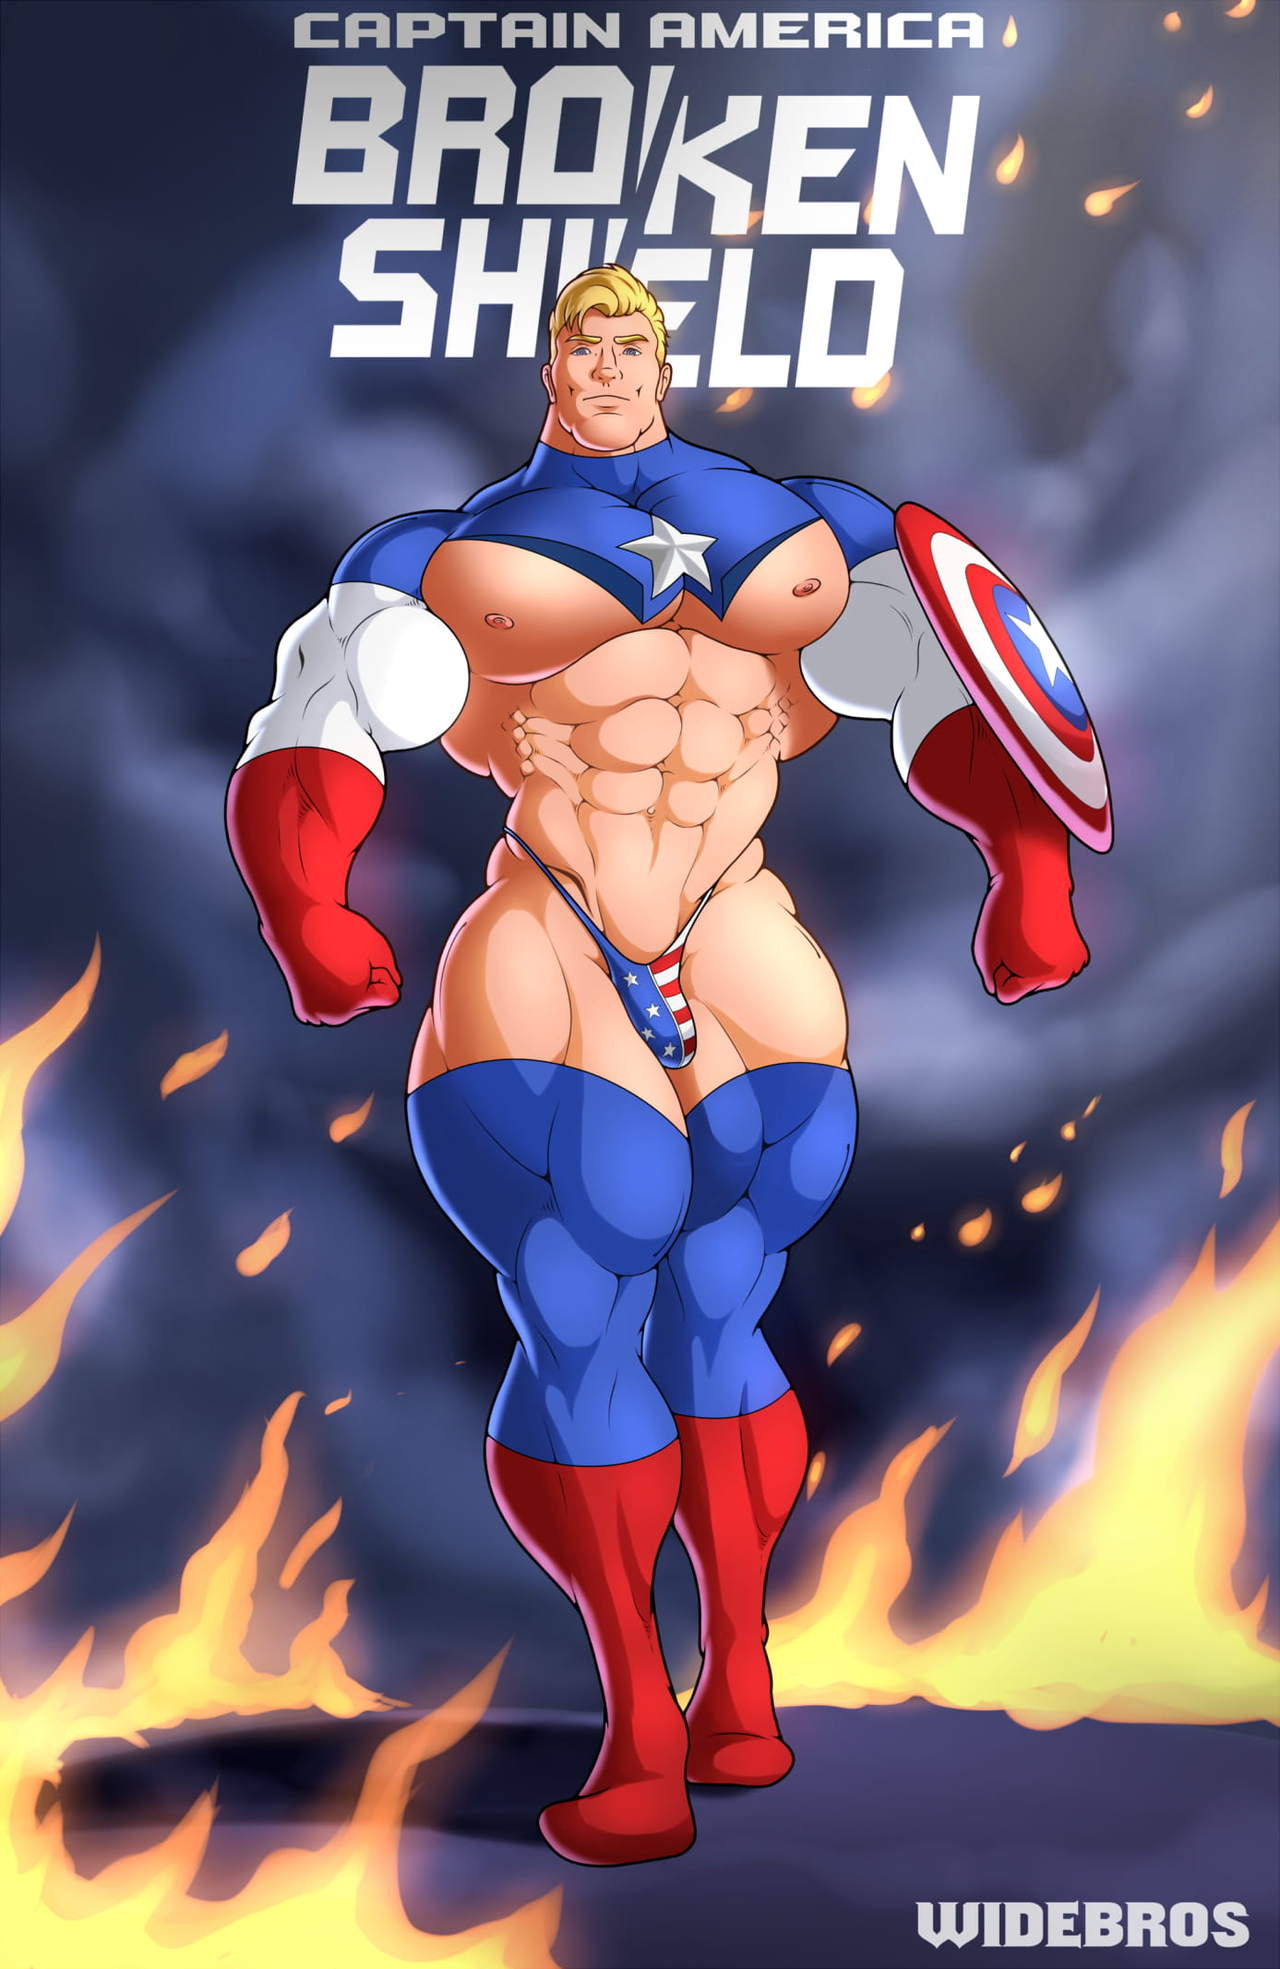 Captain America Civil War Porn